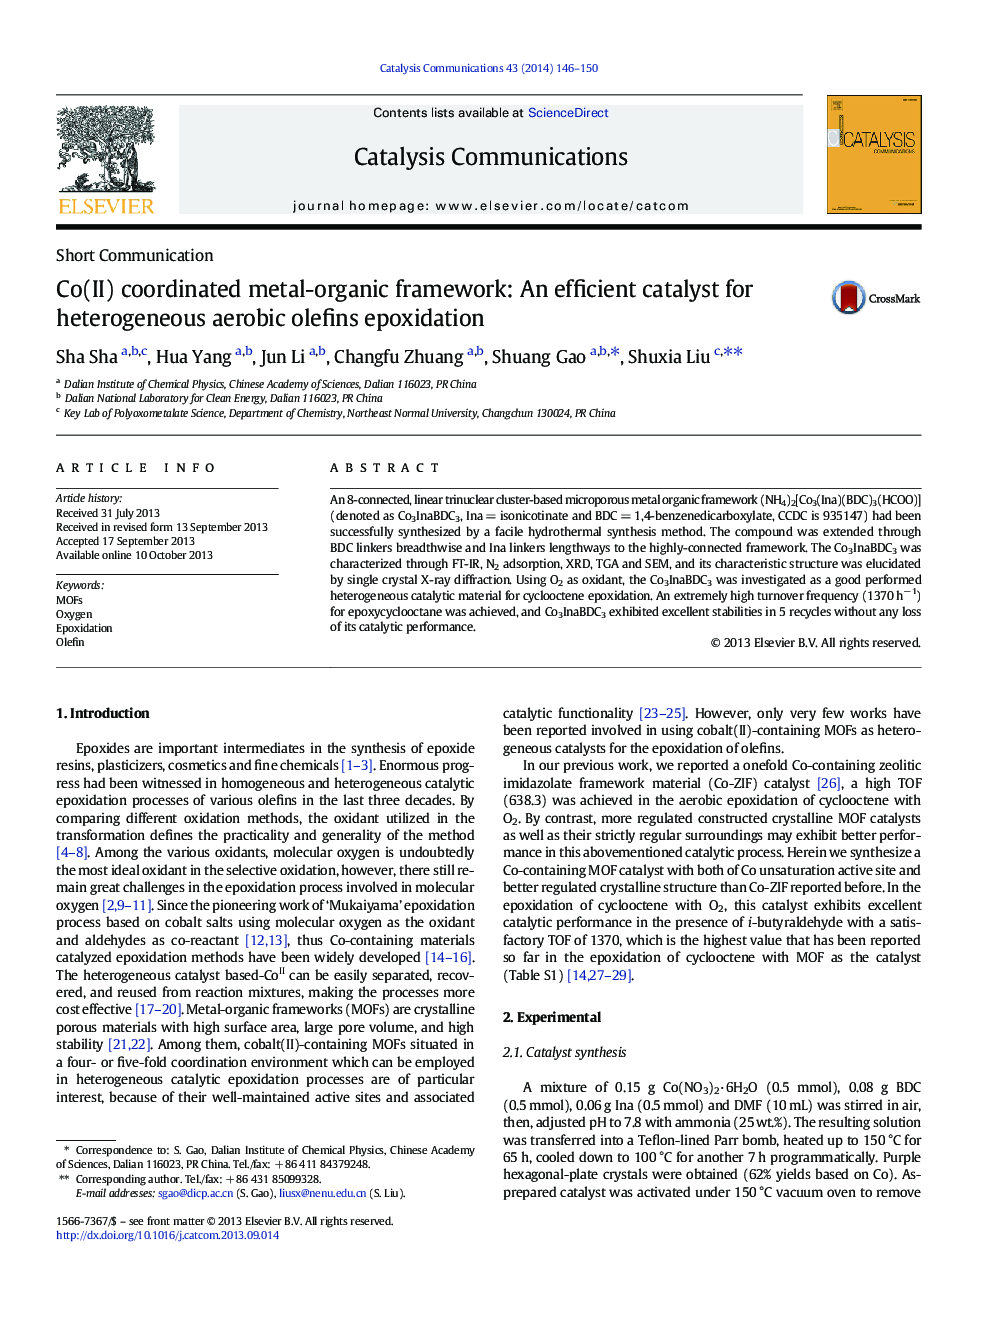 Co(II) coordinated metal-organic framework: An efficient catalyst for heterogeneous aerobic olefins epoxidation